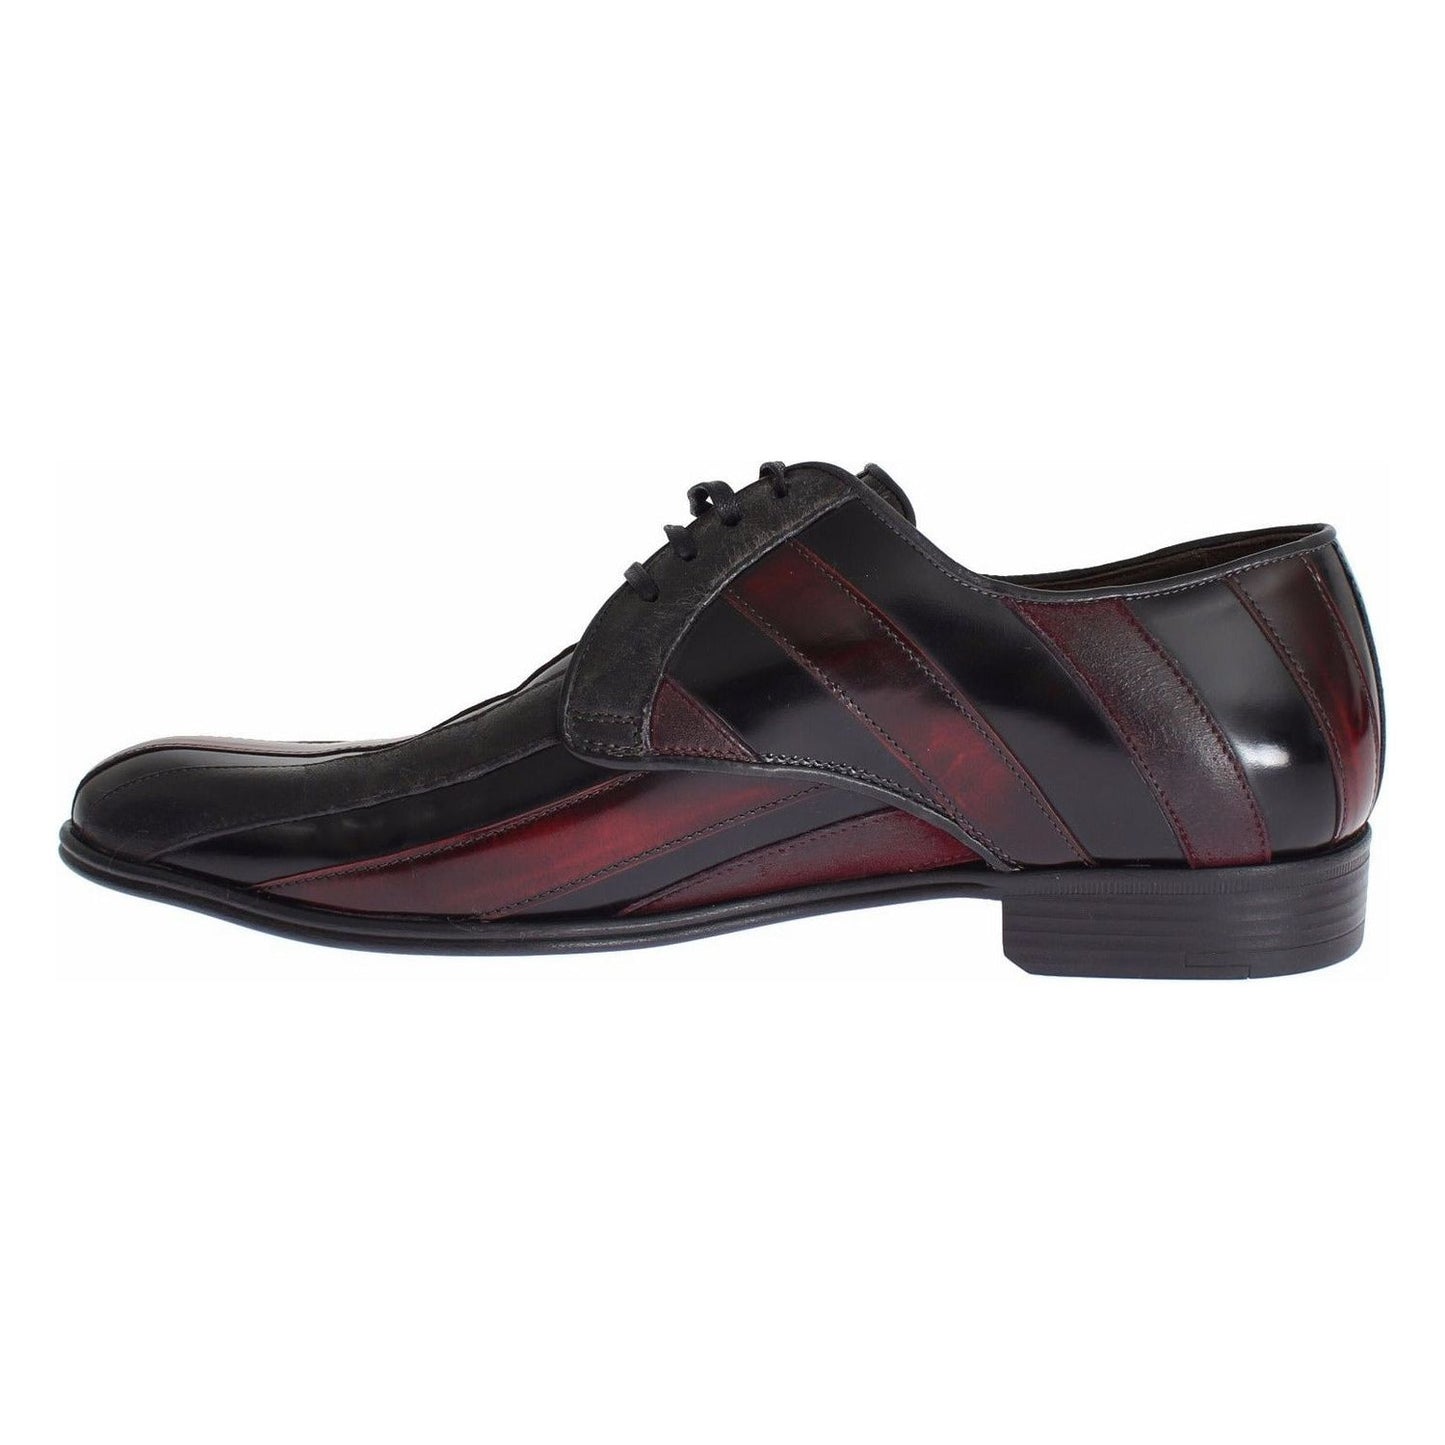 Dolce & Gabbana Elegant Black Bordeaux Striped Leather Dress Shoes Dress Shoes black-bordeaux-leather-dress-formal-shoes